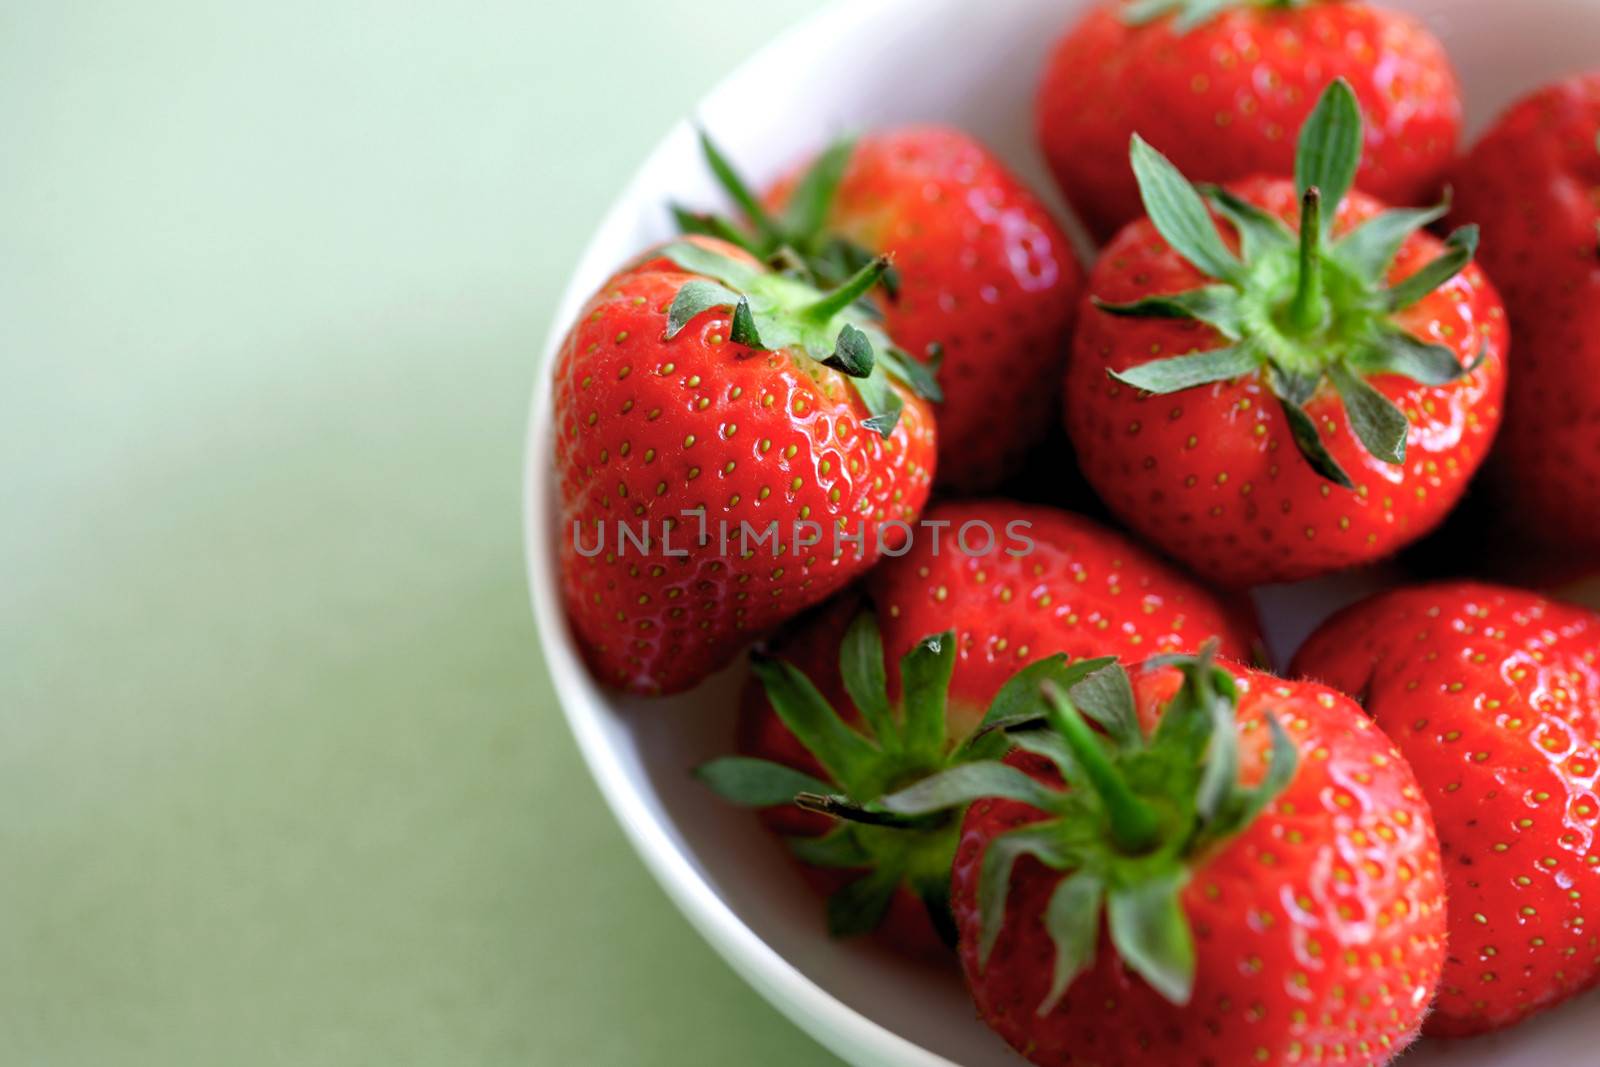 Strawberries by Whiteboxmedia